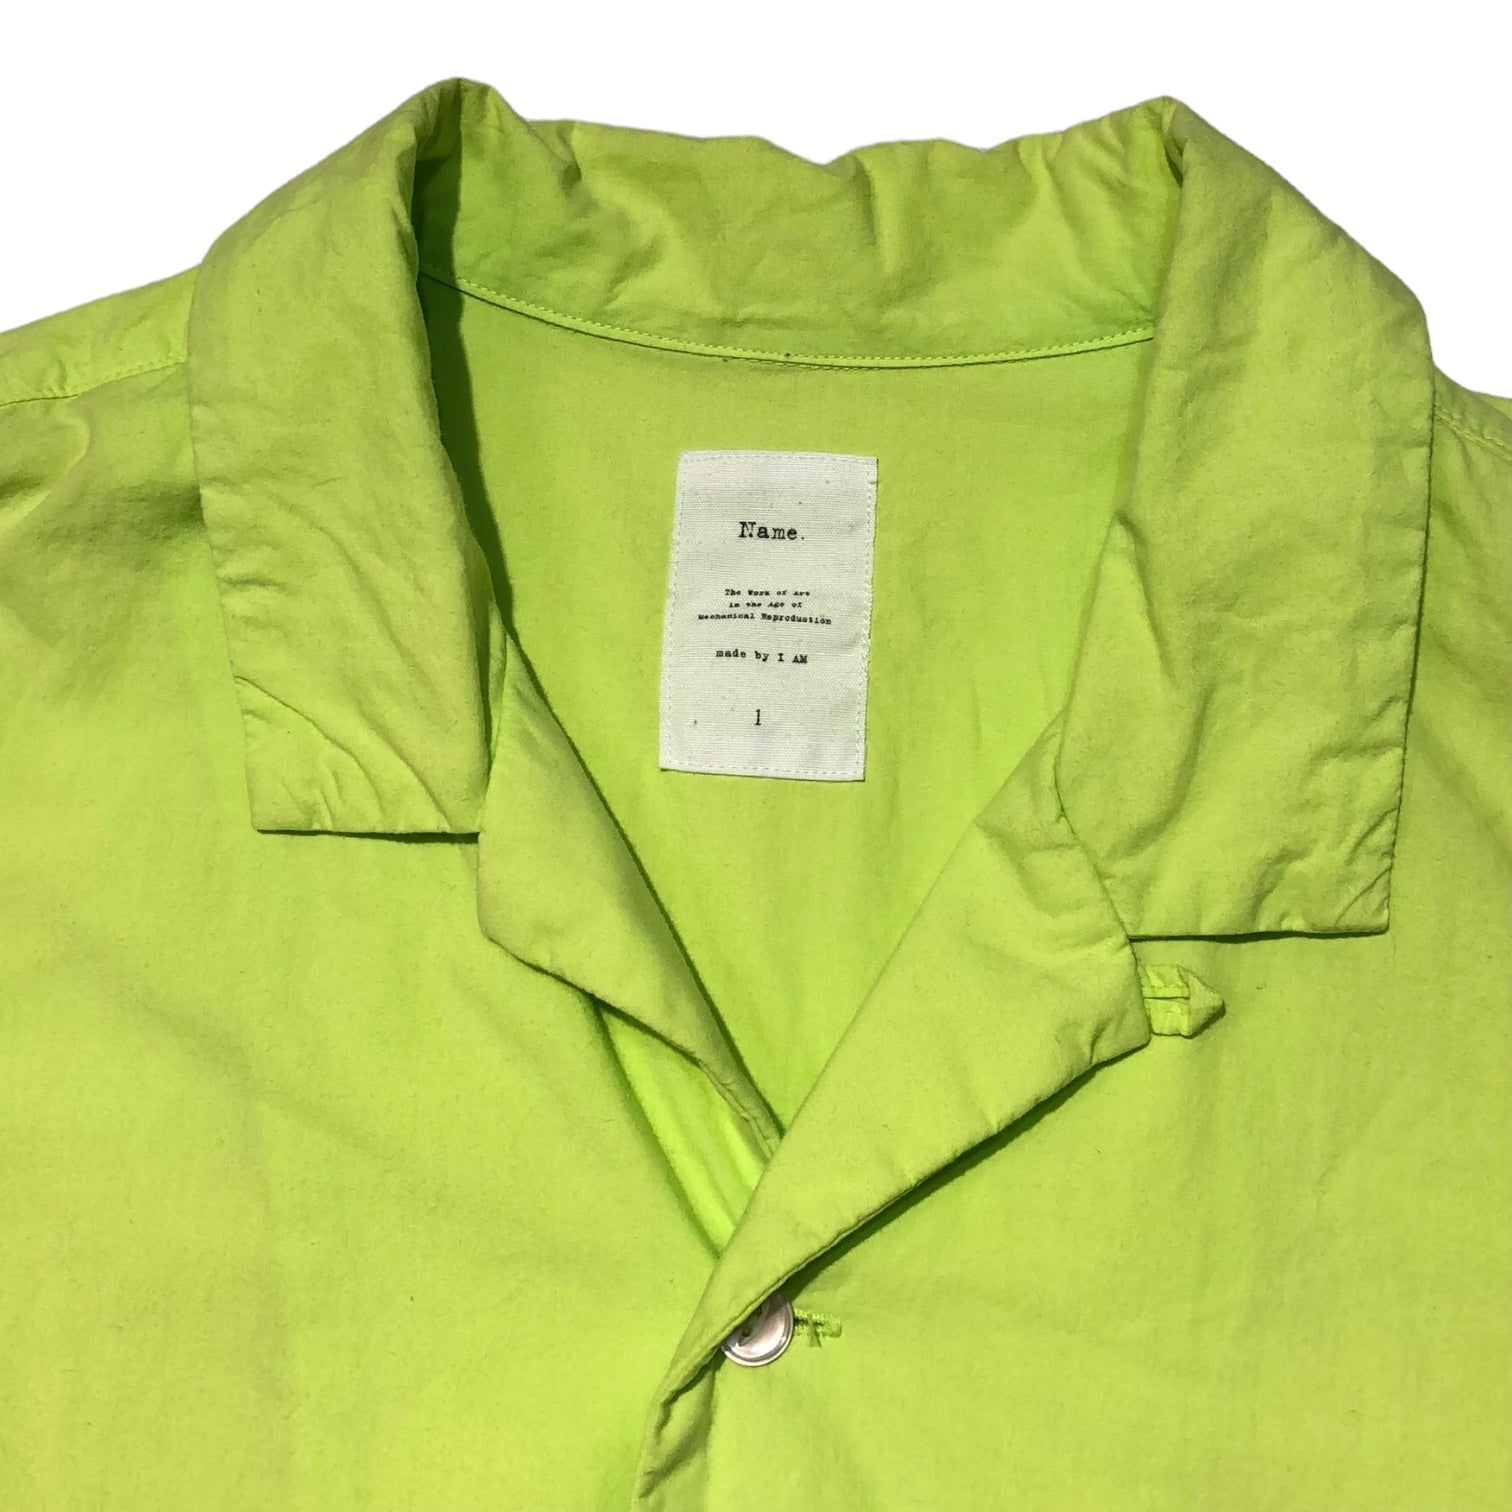 Name.(ネーム) 18SS Oversized open collar S/S shirt オーバーサイズ オープンカラー 半袖 シャツ NMSH-18SS-002 1(S程度) ライトグリーン